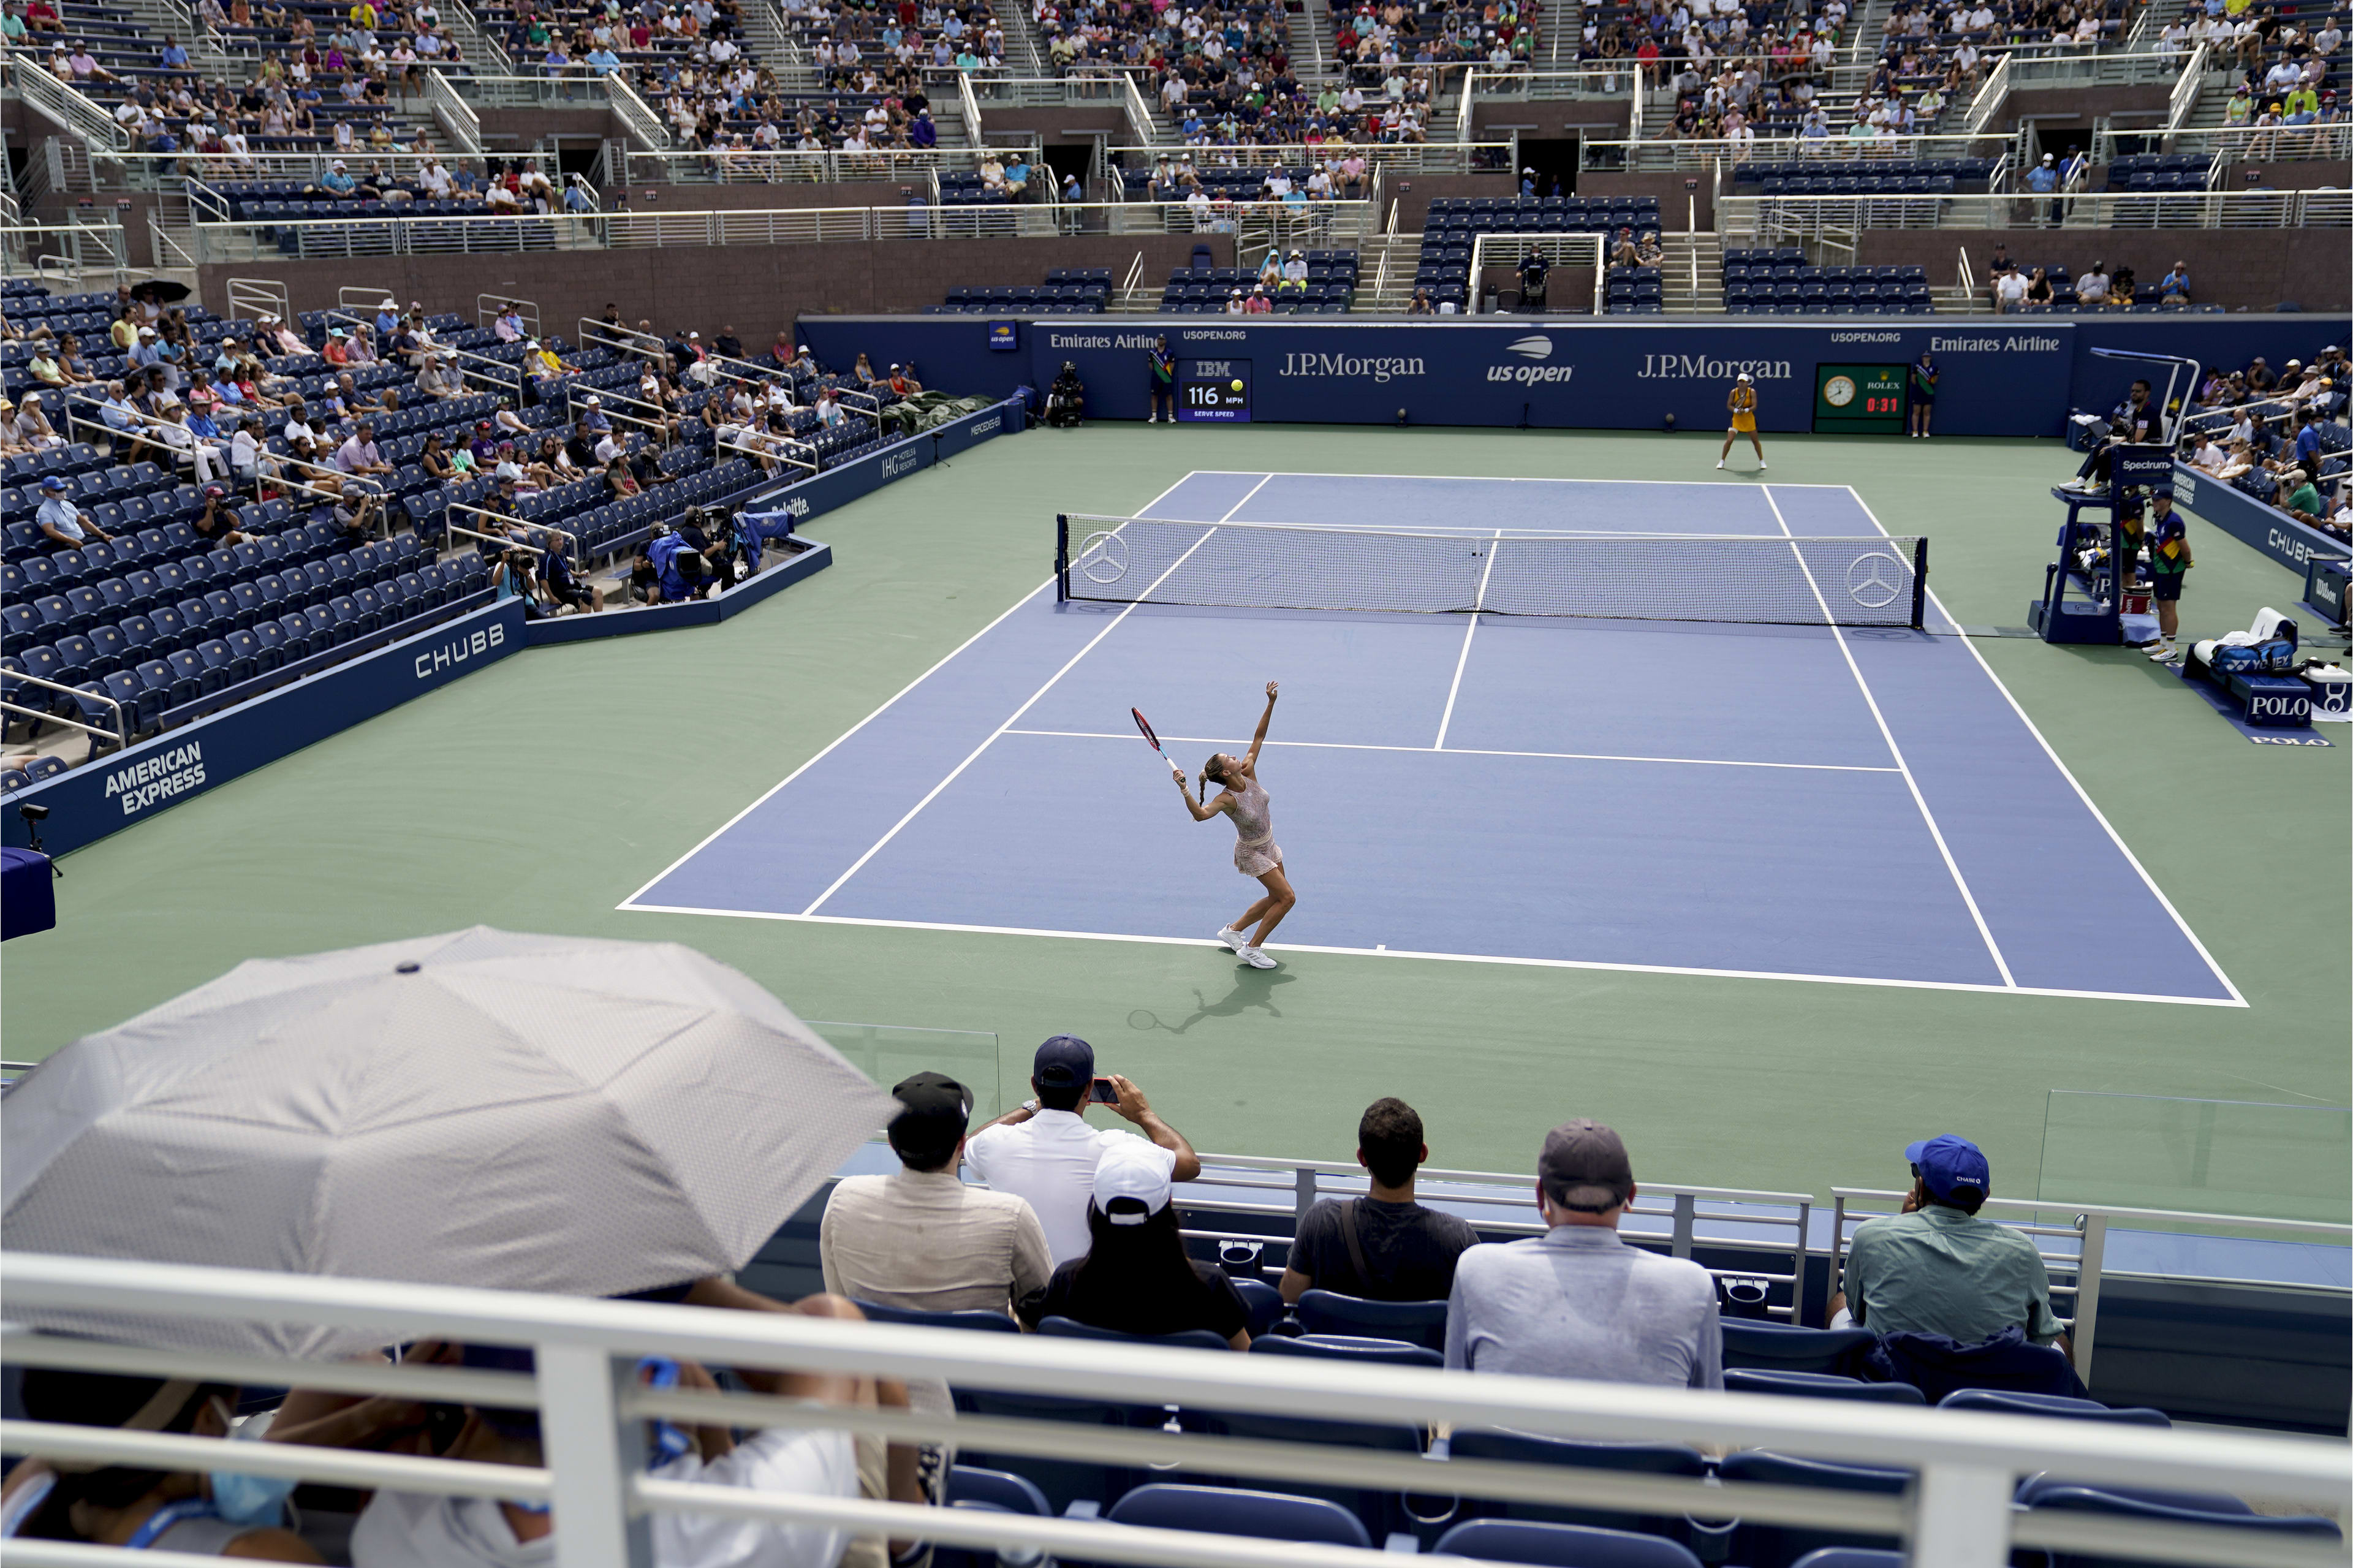 After US Open loss, Murray calls Tsitsipas breaks 'nonsense' - Tennis.com